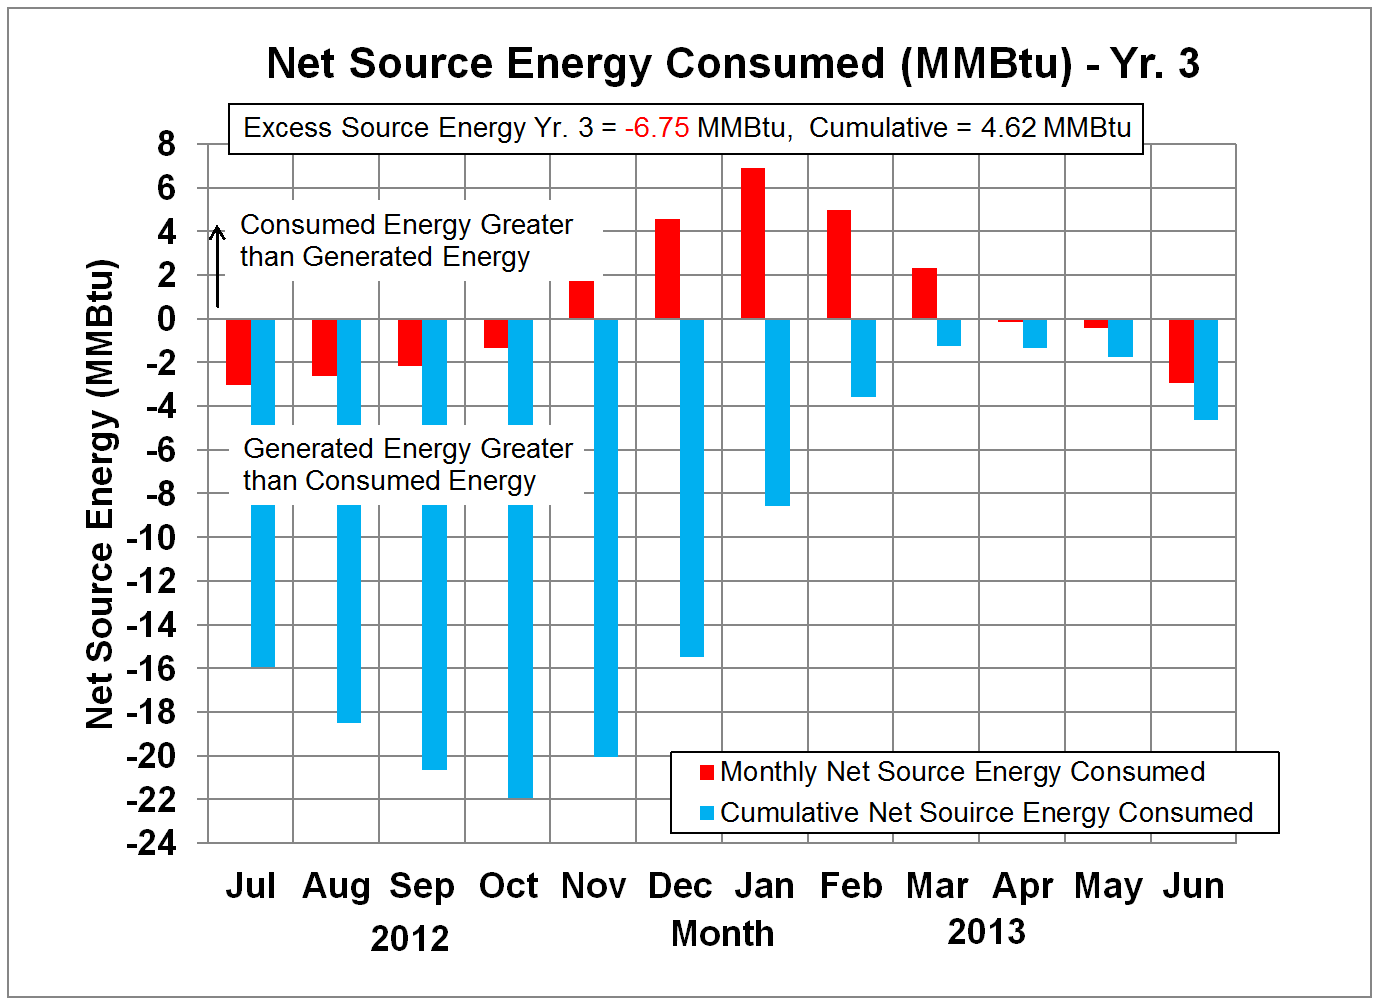 Net Source Energy in Million Btu's - Yr. 3